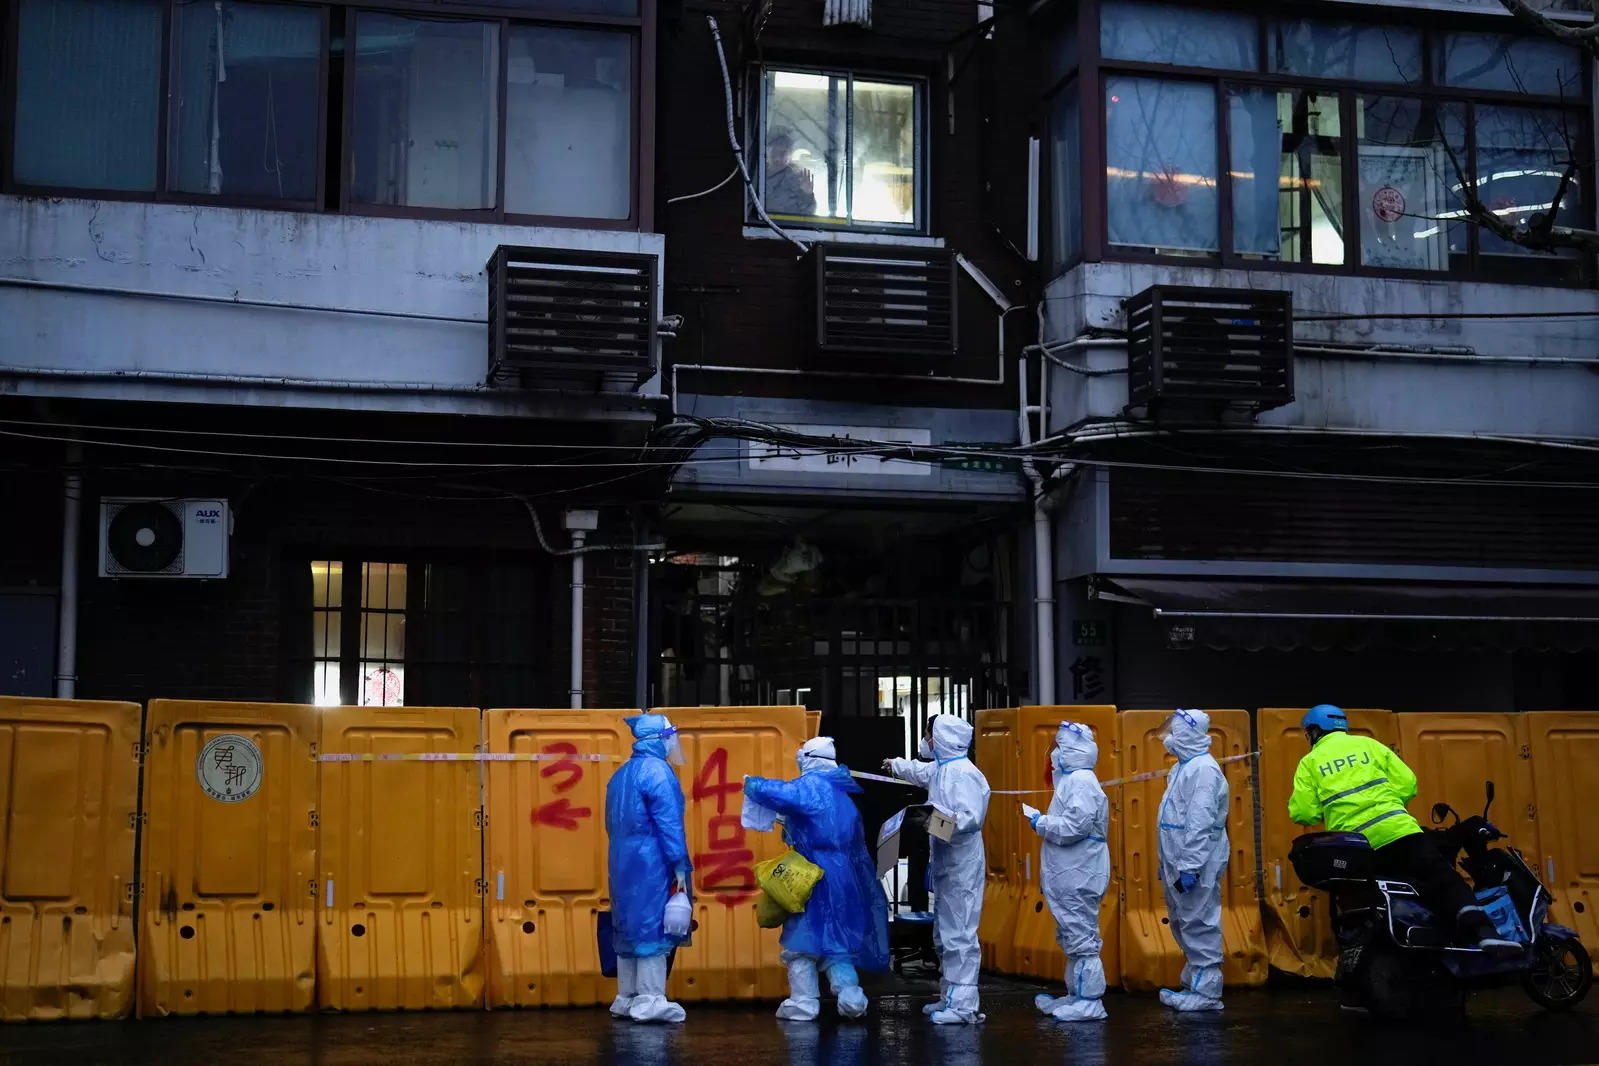 Covid-19 Κίνα: Ειδικός προειδοποιεί ότι οι νεκροί από το lockdown στη Σαγκάη θα είναι «πολύ περισσότεροι» από τις ζωές που σώζονται